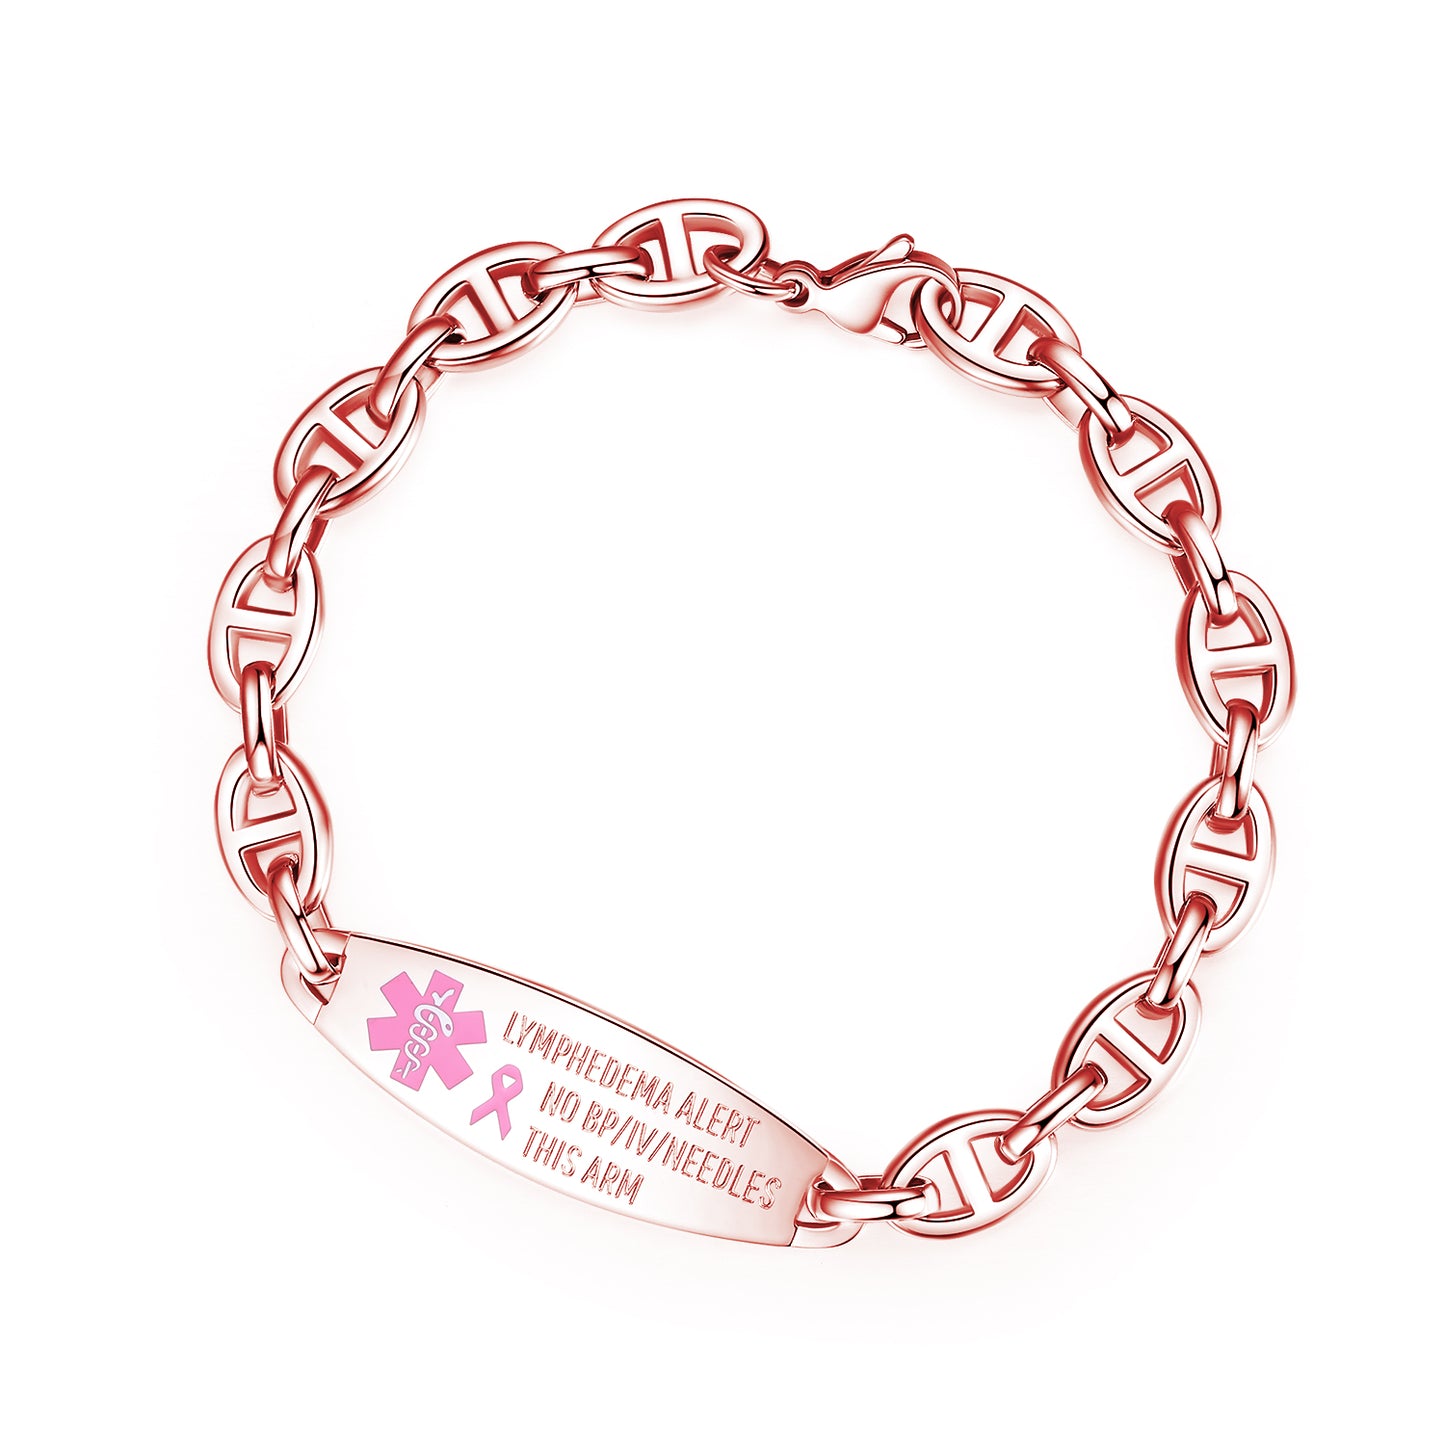 Horseshoe lymphedema alert bracelet for women no bp no iv no needles bracelets